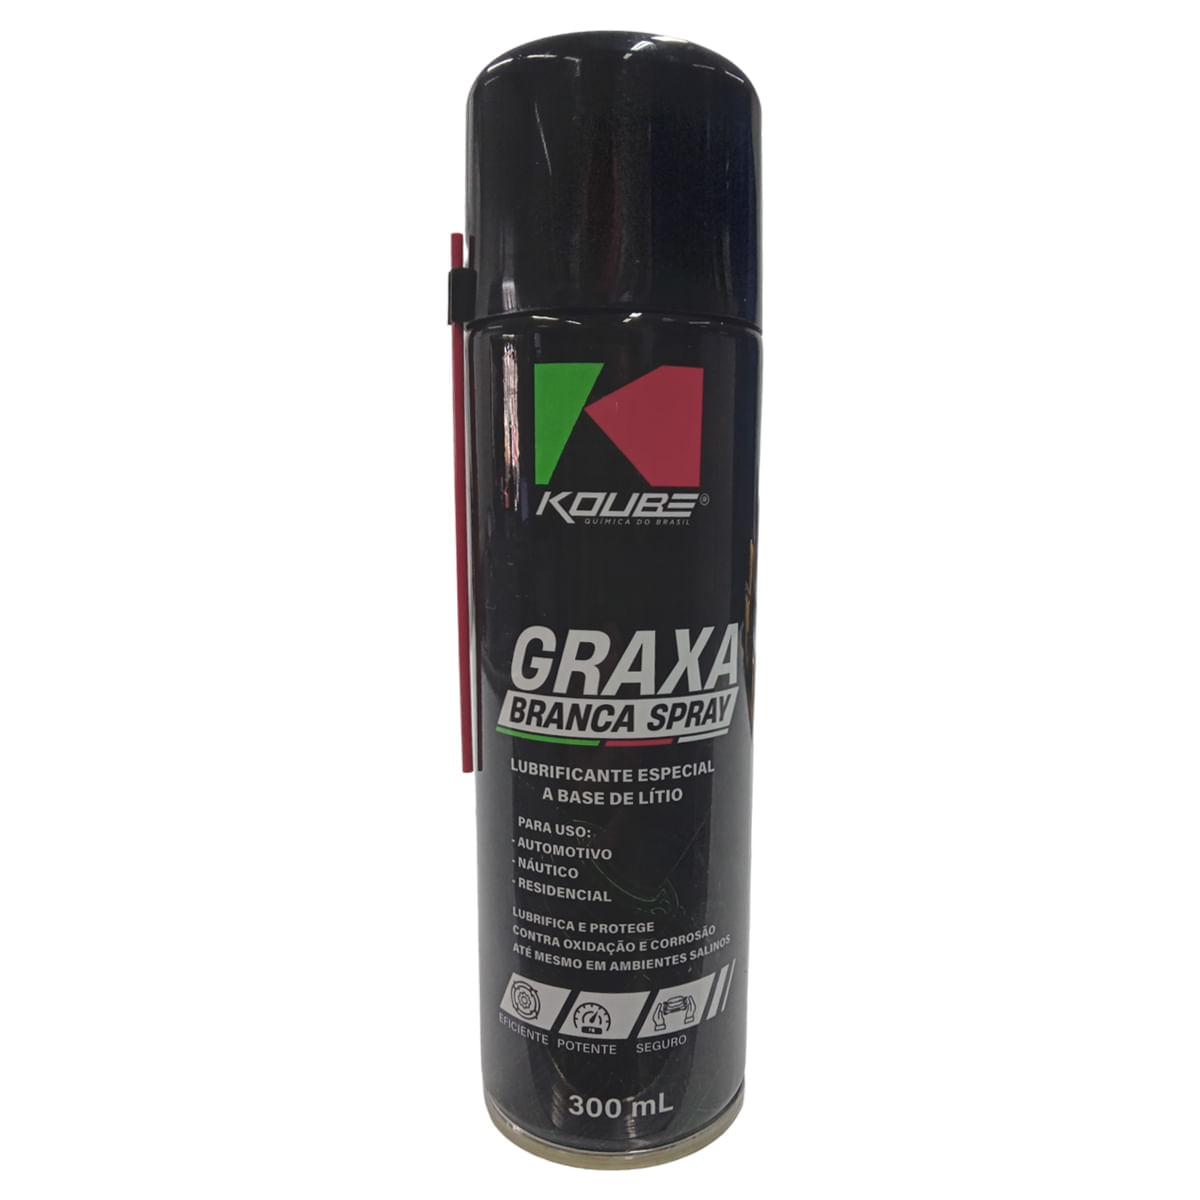 Graxa Branca Spray Koube 200g/300ml